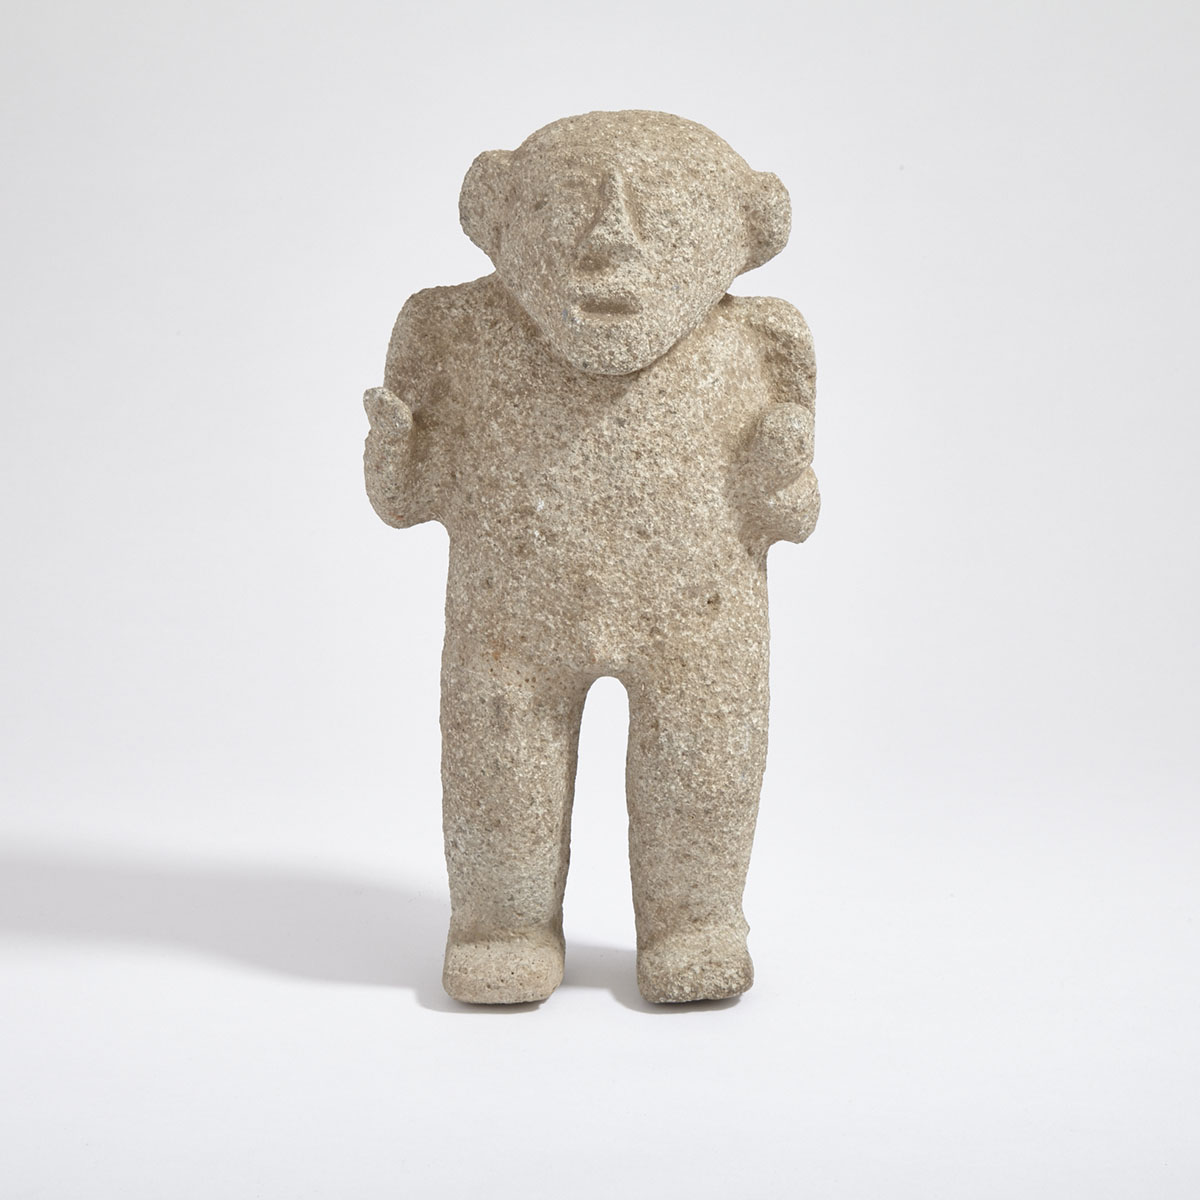 Guanacaste Nicoya Peninsula Standing Male Figure, 800-1200 A.D.